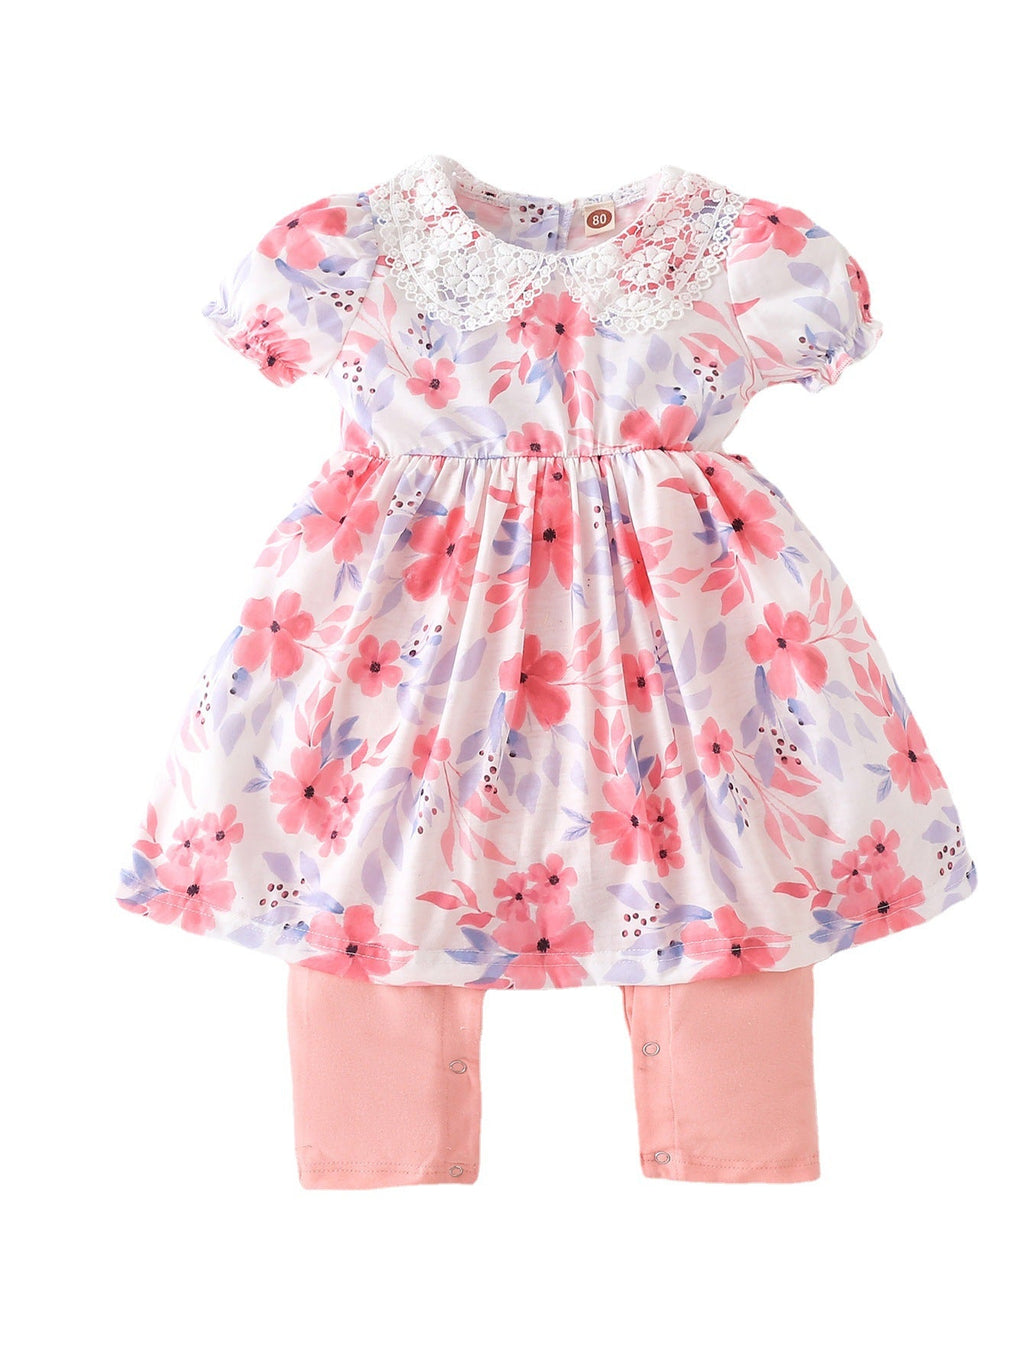 0-18months Baby Onesies Sweet Pink Printed Romper Short-Sleeved Fake Two-Piece Jumpsuit For Baby Girls - PrettyKid